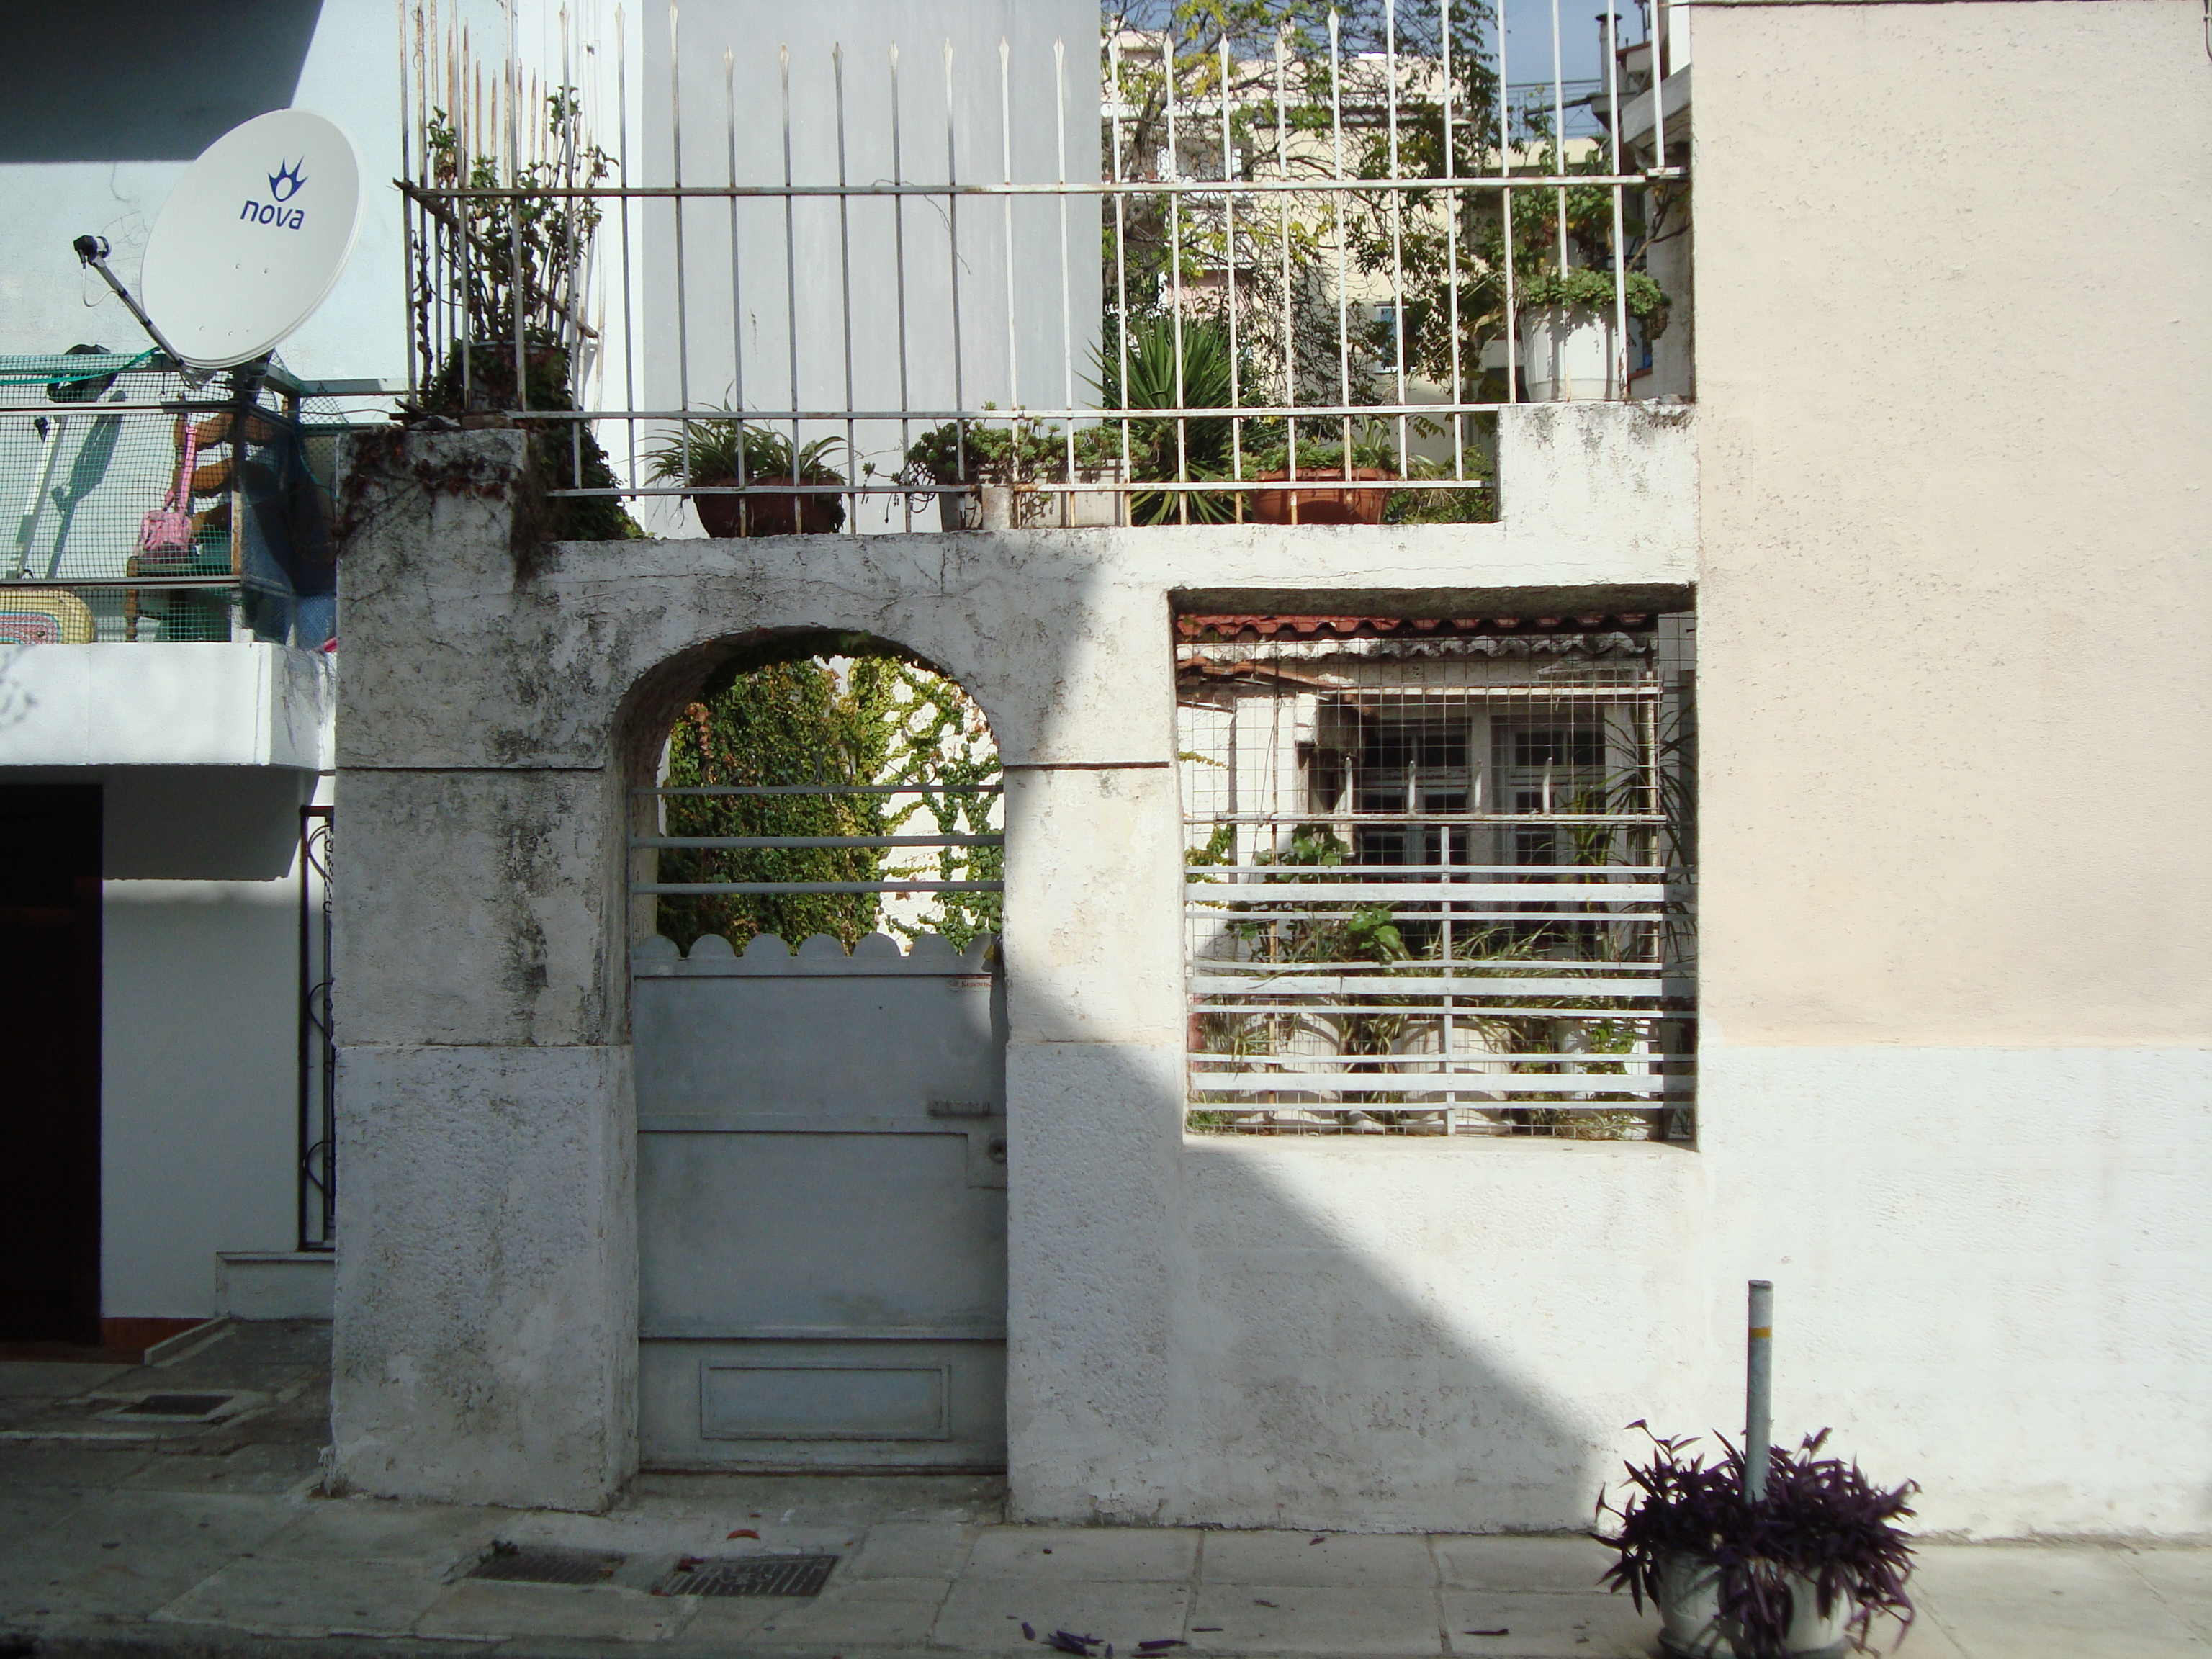 Yard gate